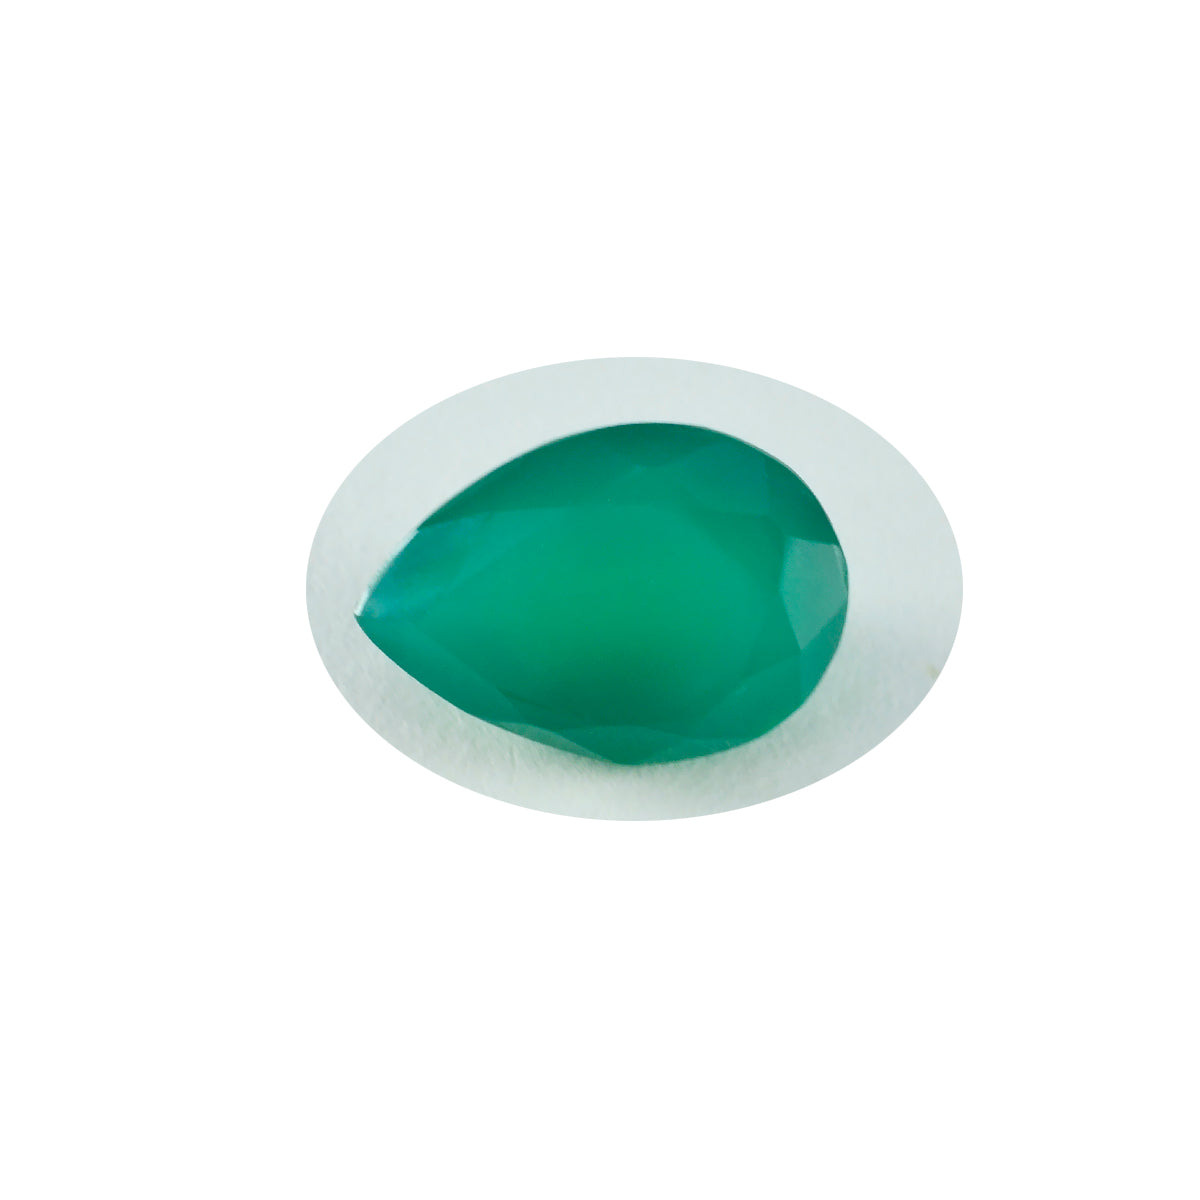 Riyogems 1PC Natural Green Jasper Faceted 12x16 mm Pear Shape A1 Quality Loose Gemstone